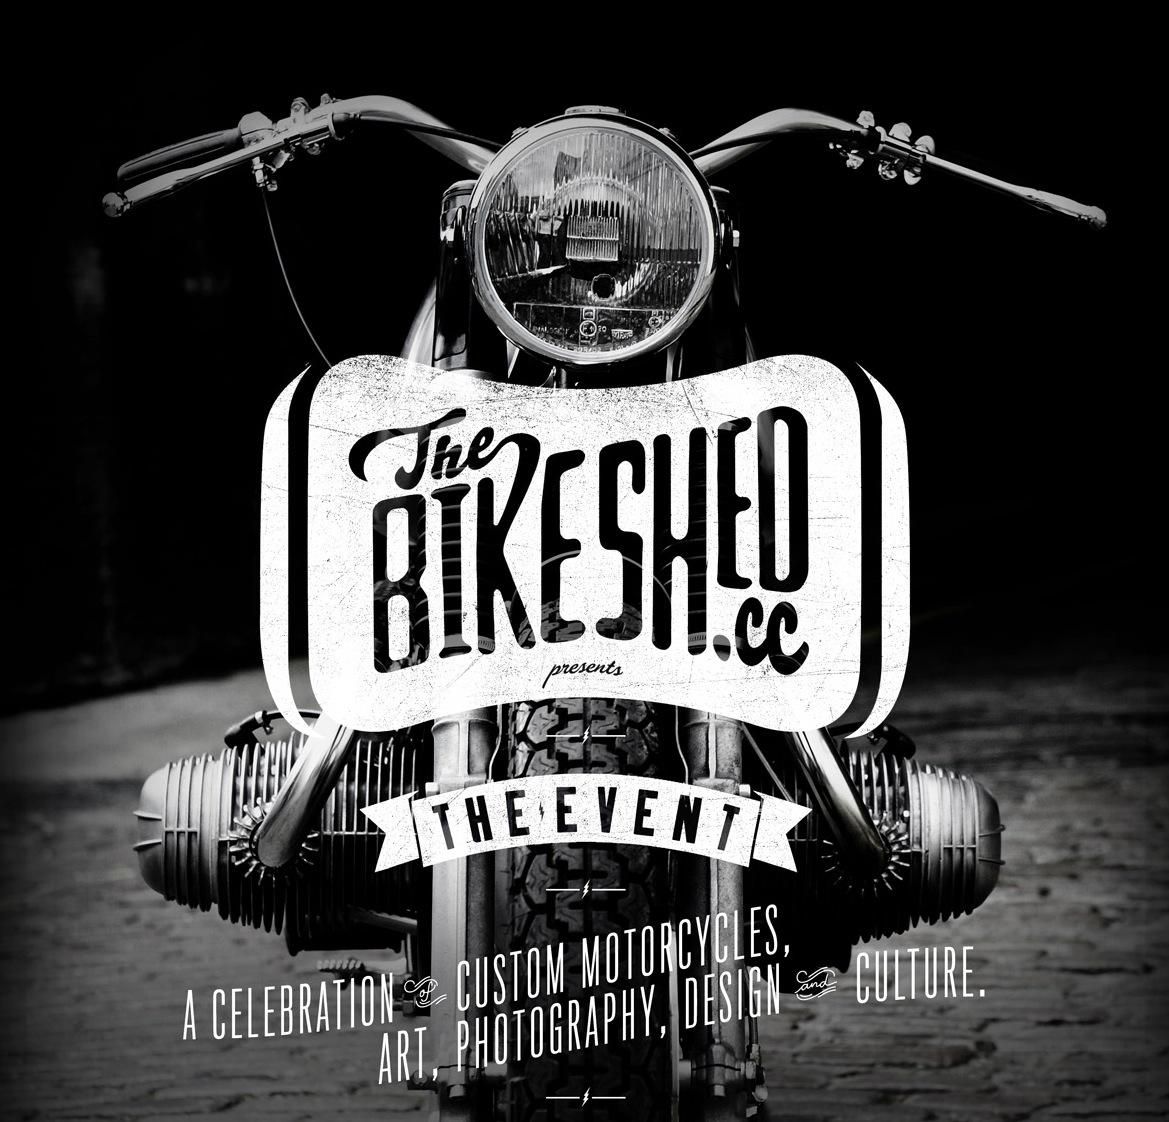 The Bike Shed Motorcycle Club Event - London Uk | Event | EatSleepRIDE